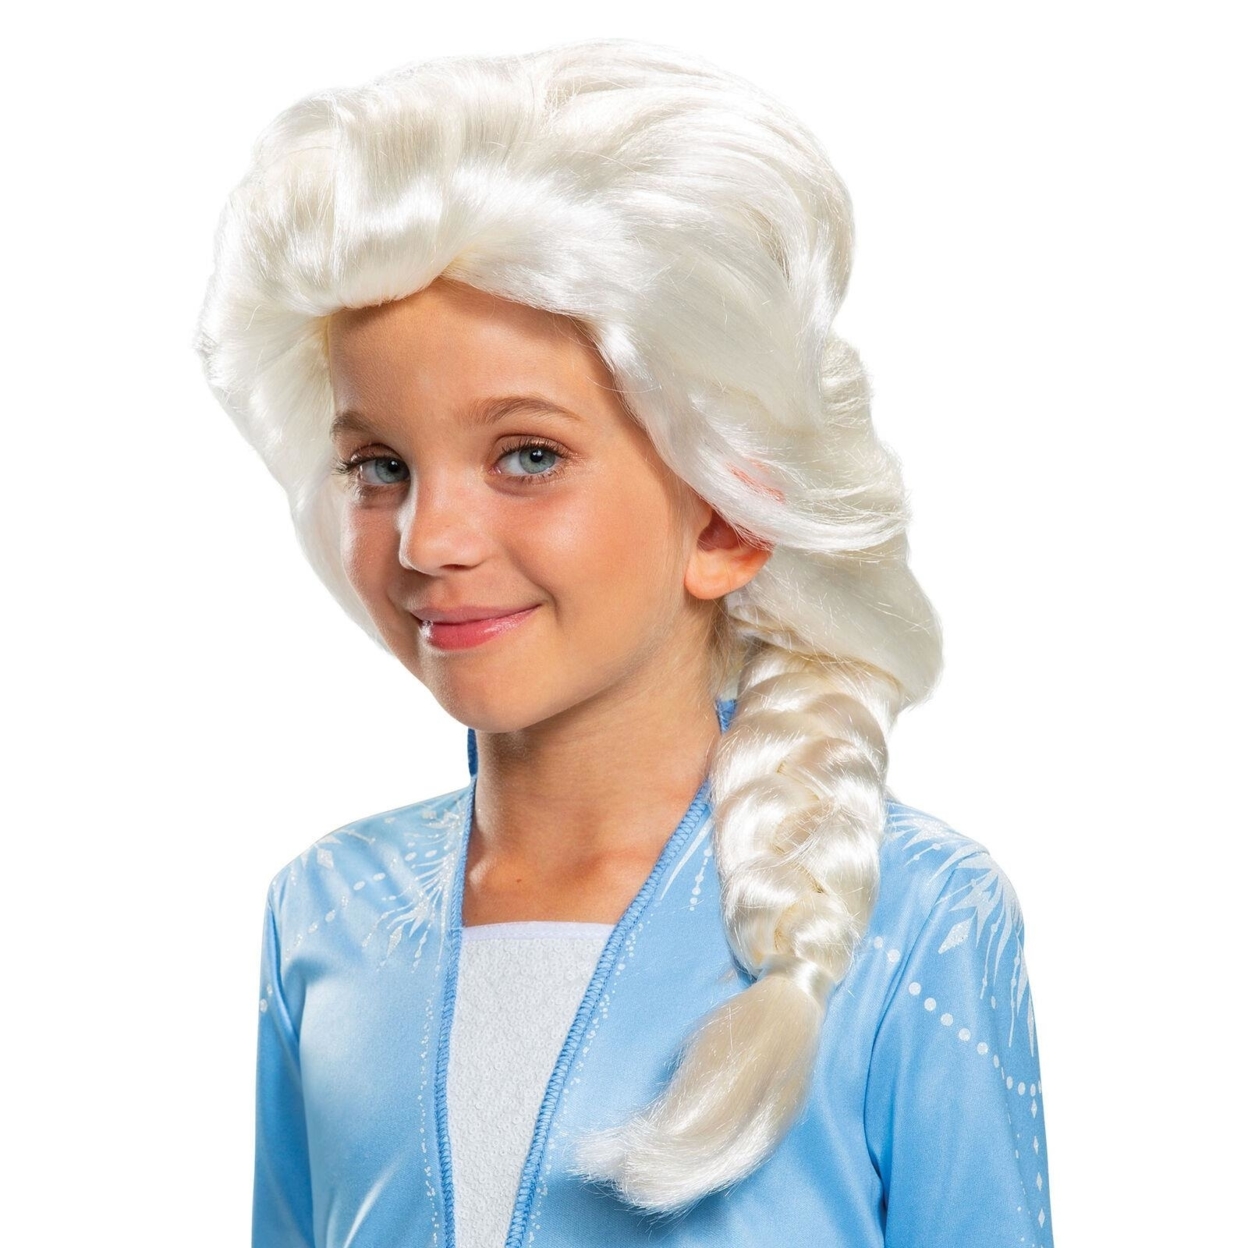 Disney Frozen 2 Elsa Child Blonde Wig Licensed Costume Accessory Disguise